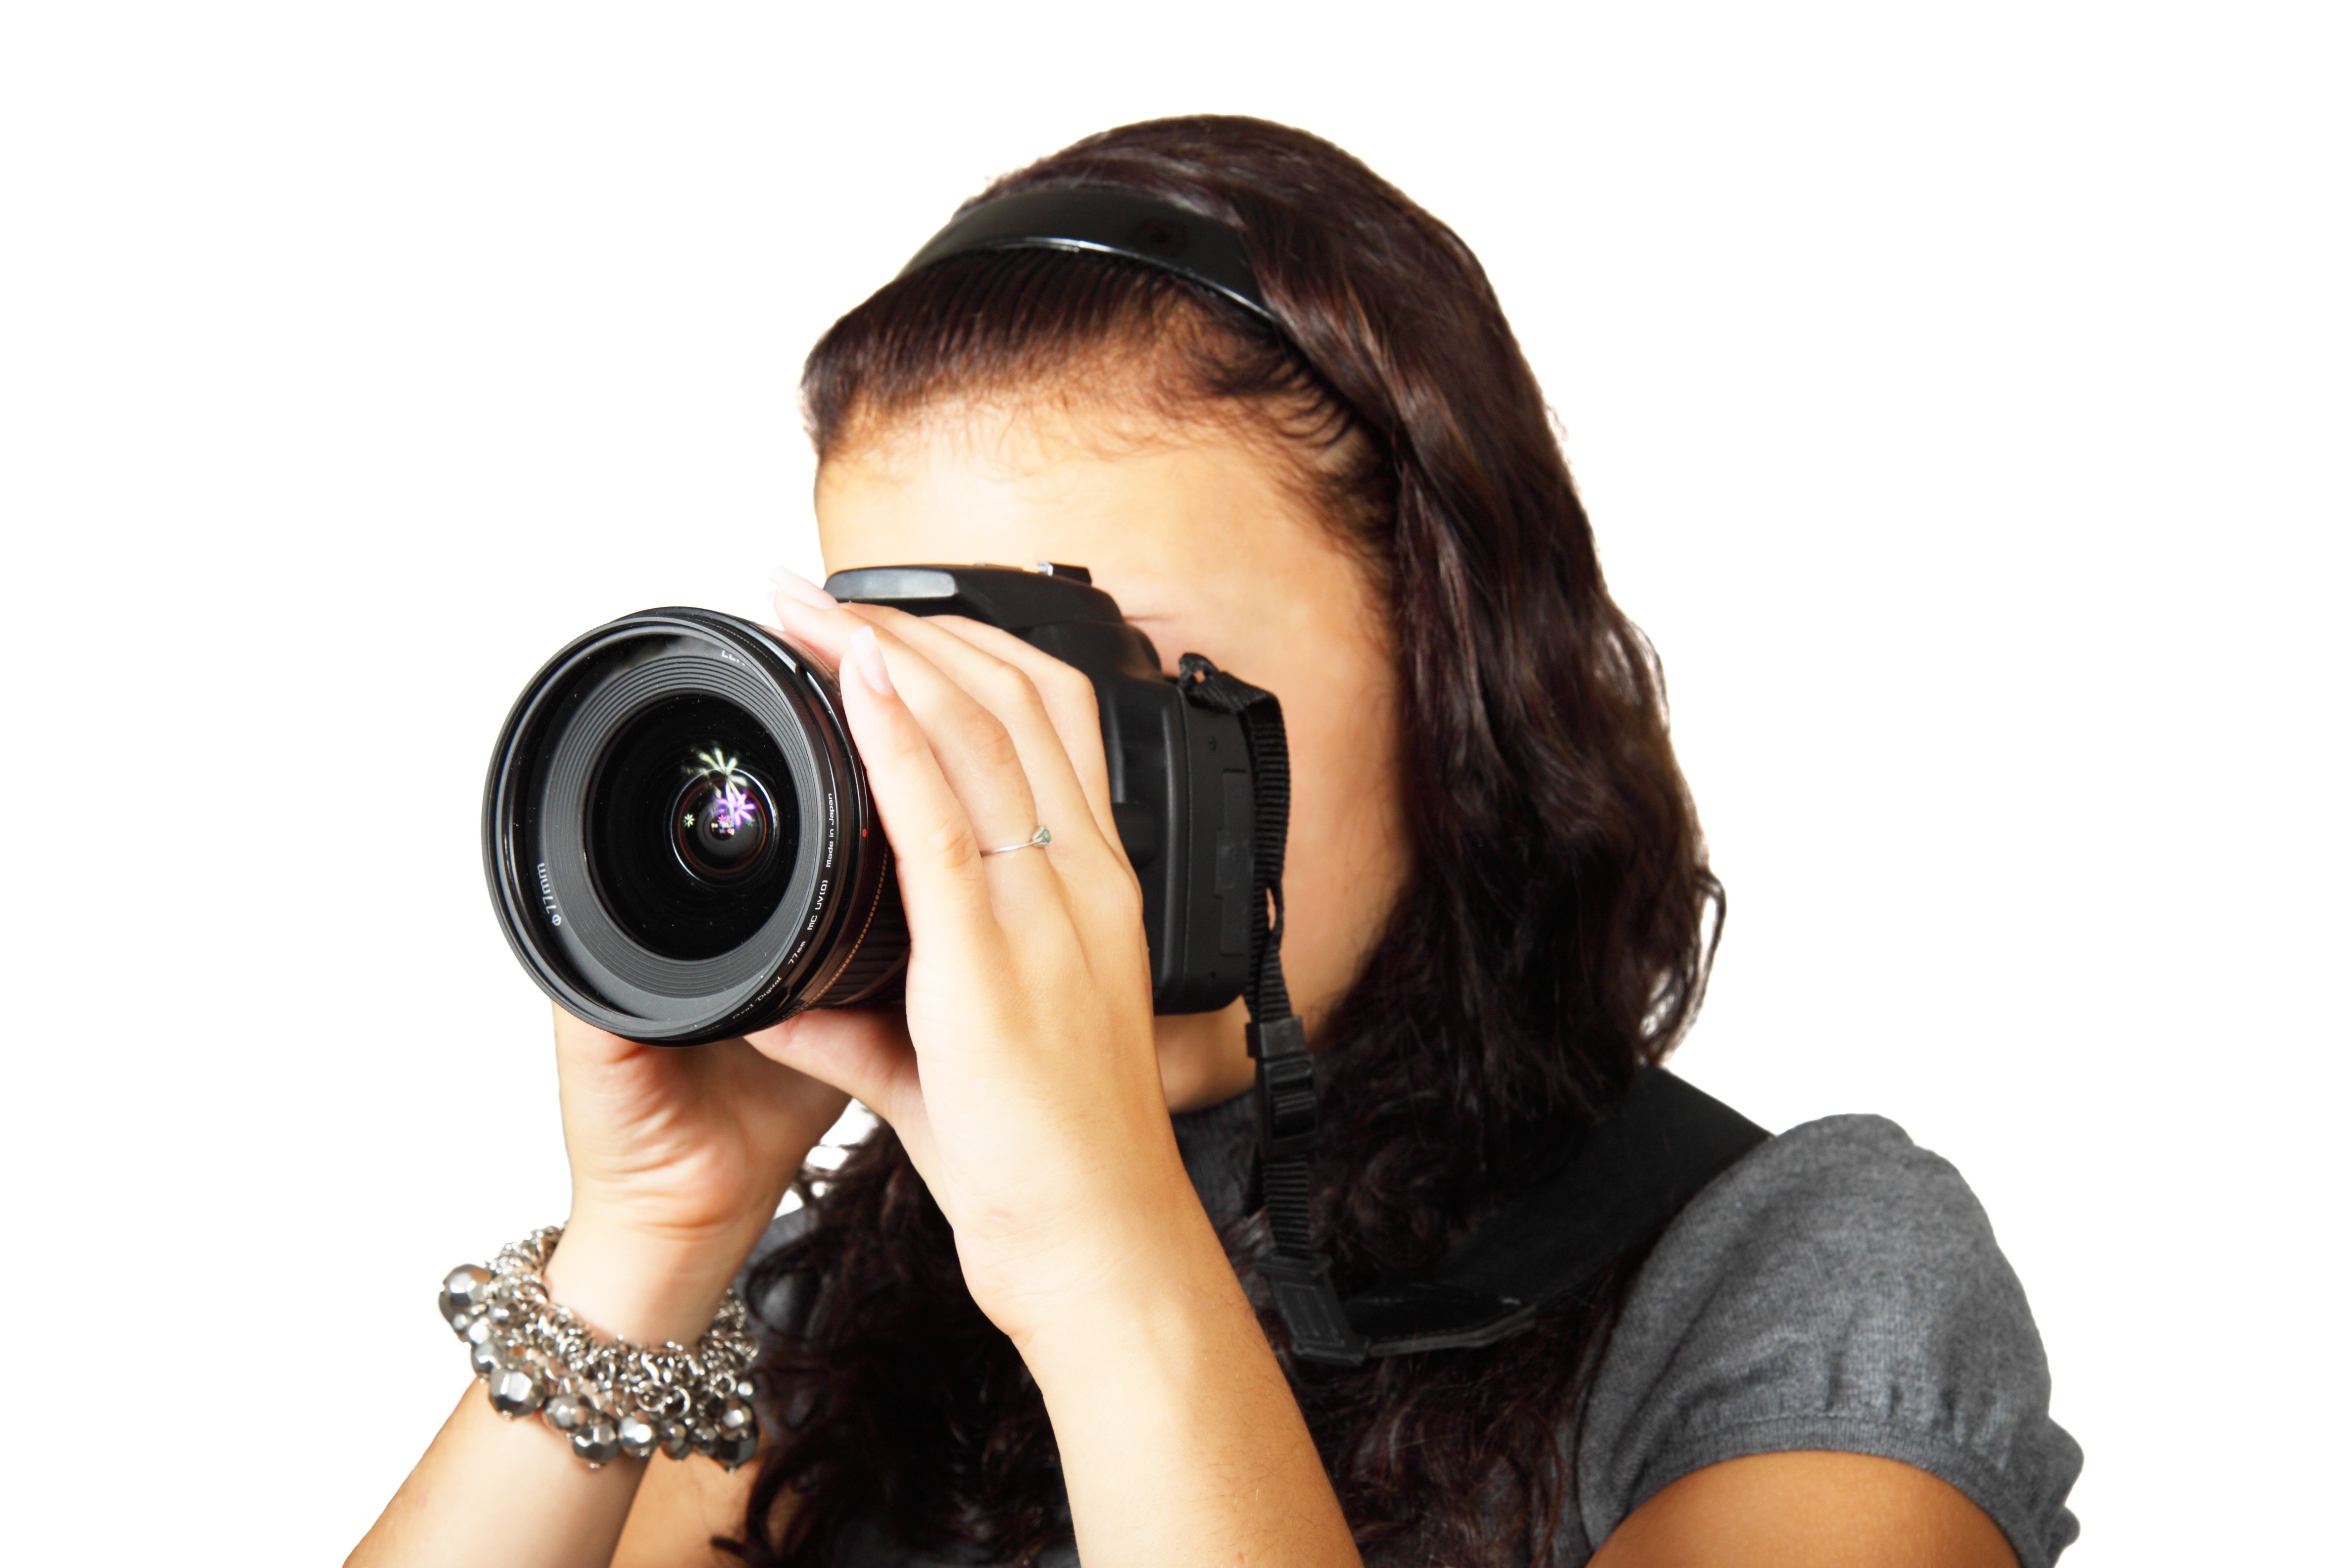 Equipment, Girl, Camera, Female, Digital, photography themes, camera - photographic equipment